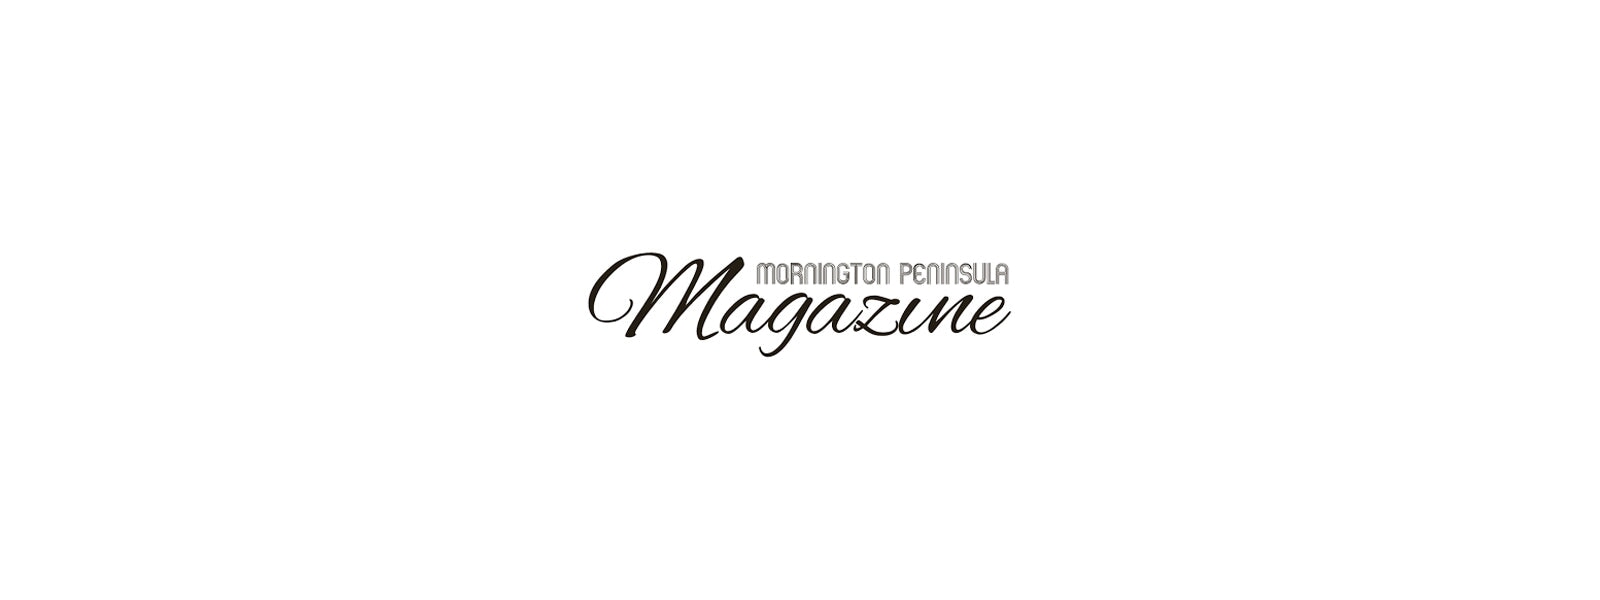 Mornington Peninsula Magazine – The Perfect Partnership